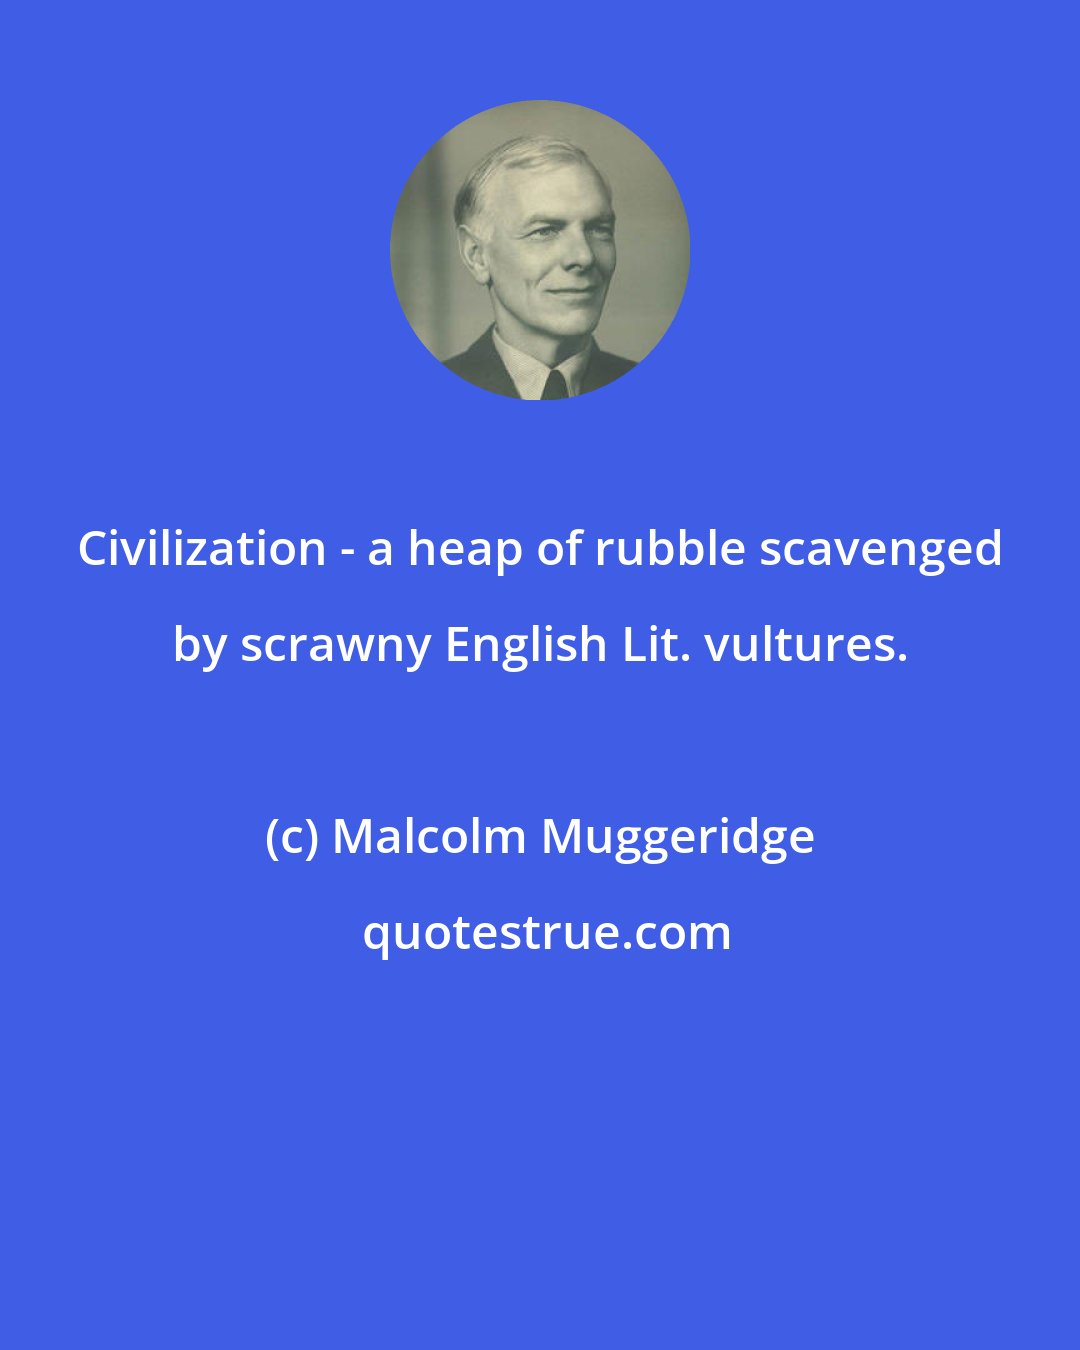 Malcolm Muggeridge: Civilization - a heap of rubble scavenged by scrawny English Lit. vultures.